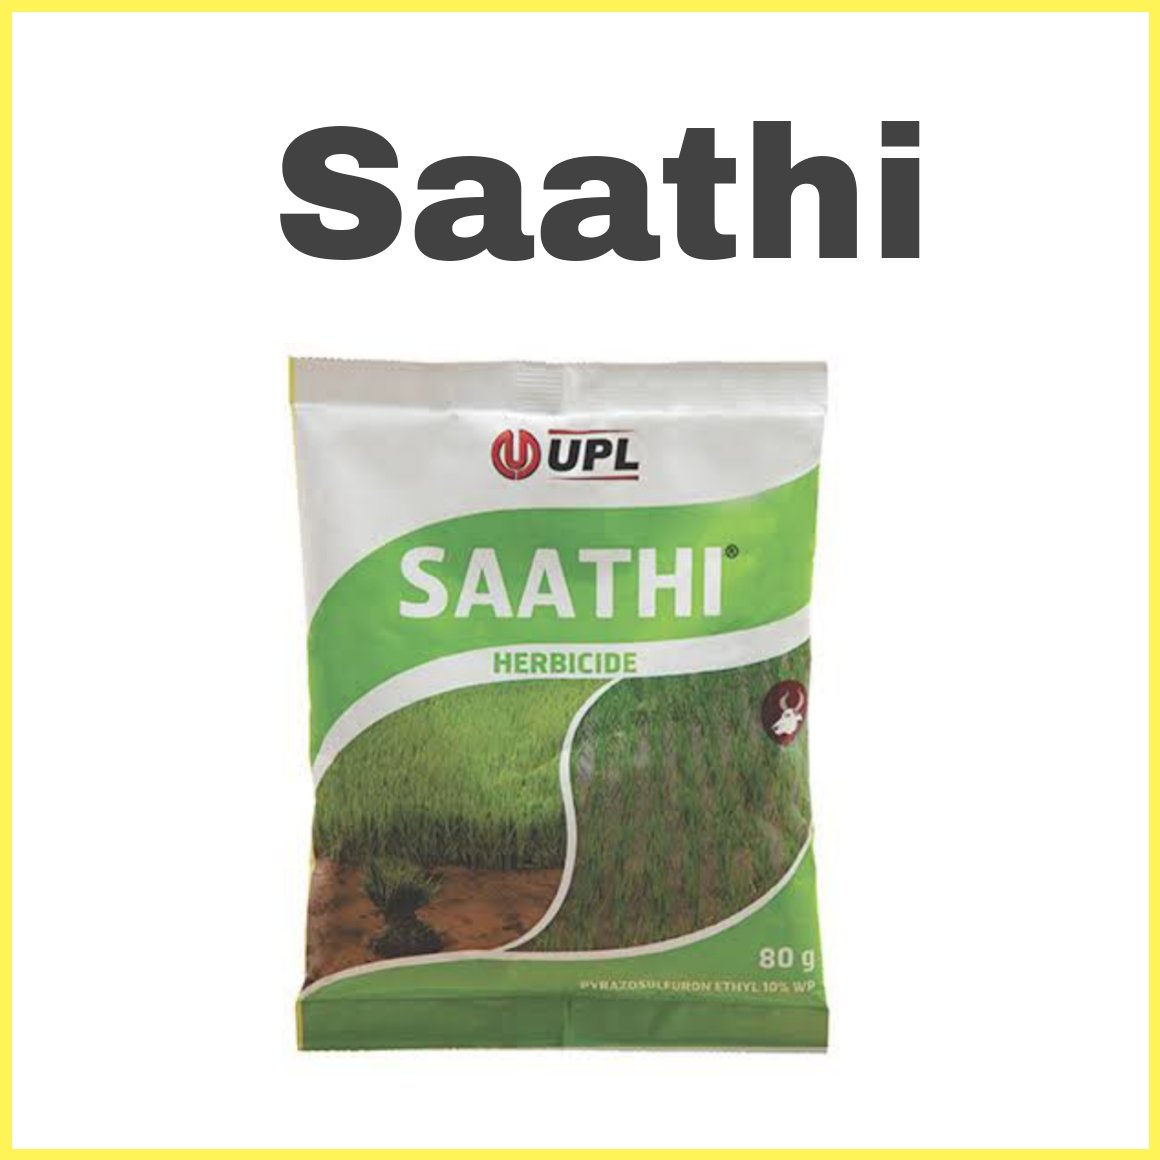 Upl Saatthi Herbicide